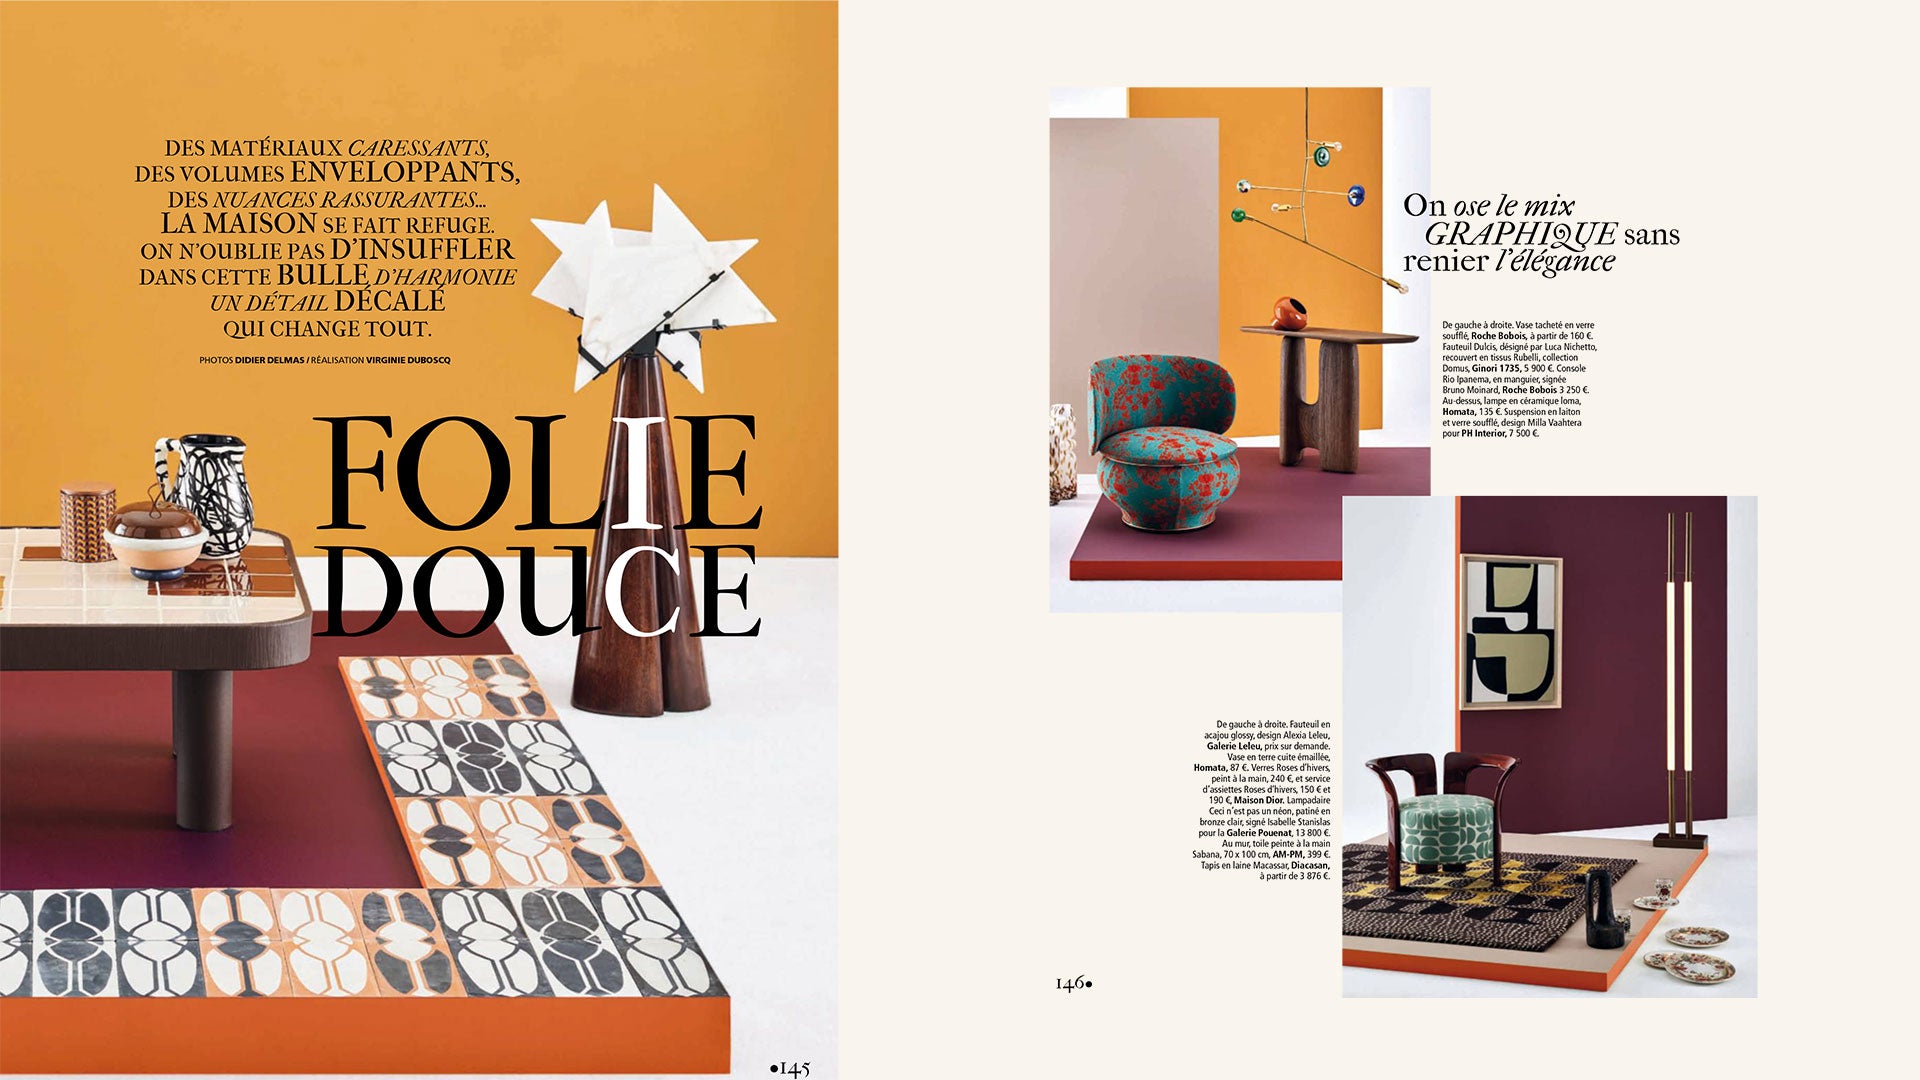 dossier déco magazine madame figaro sélection produit nova home design